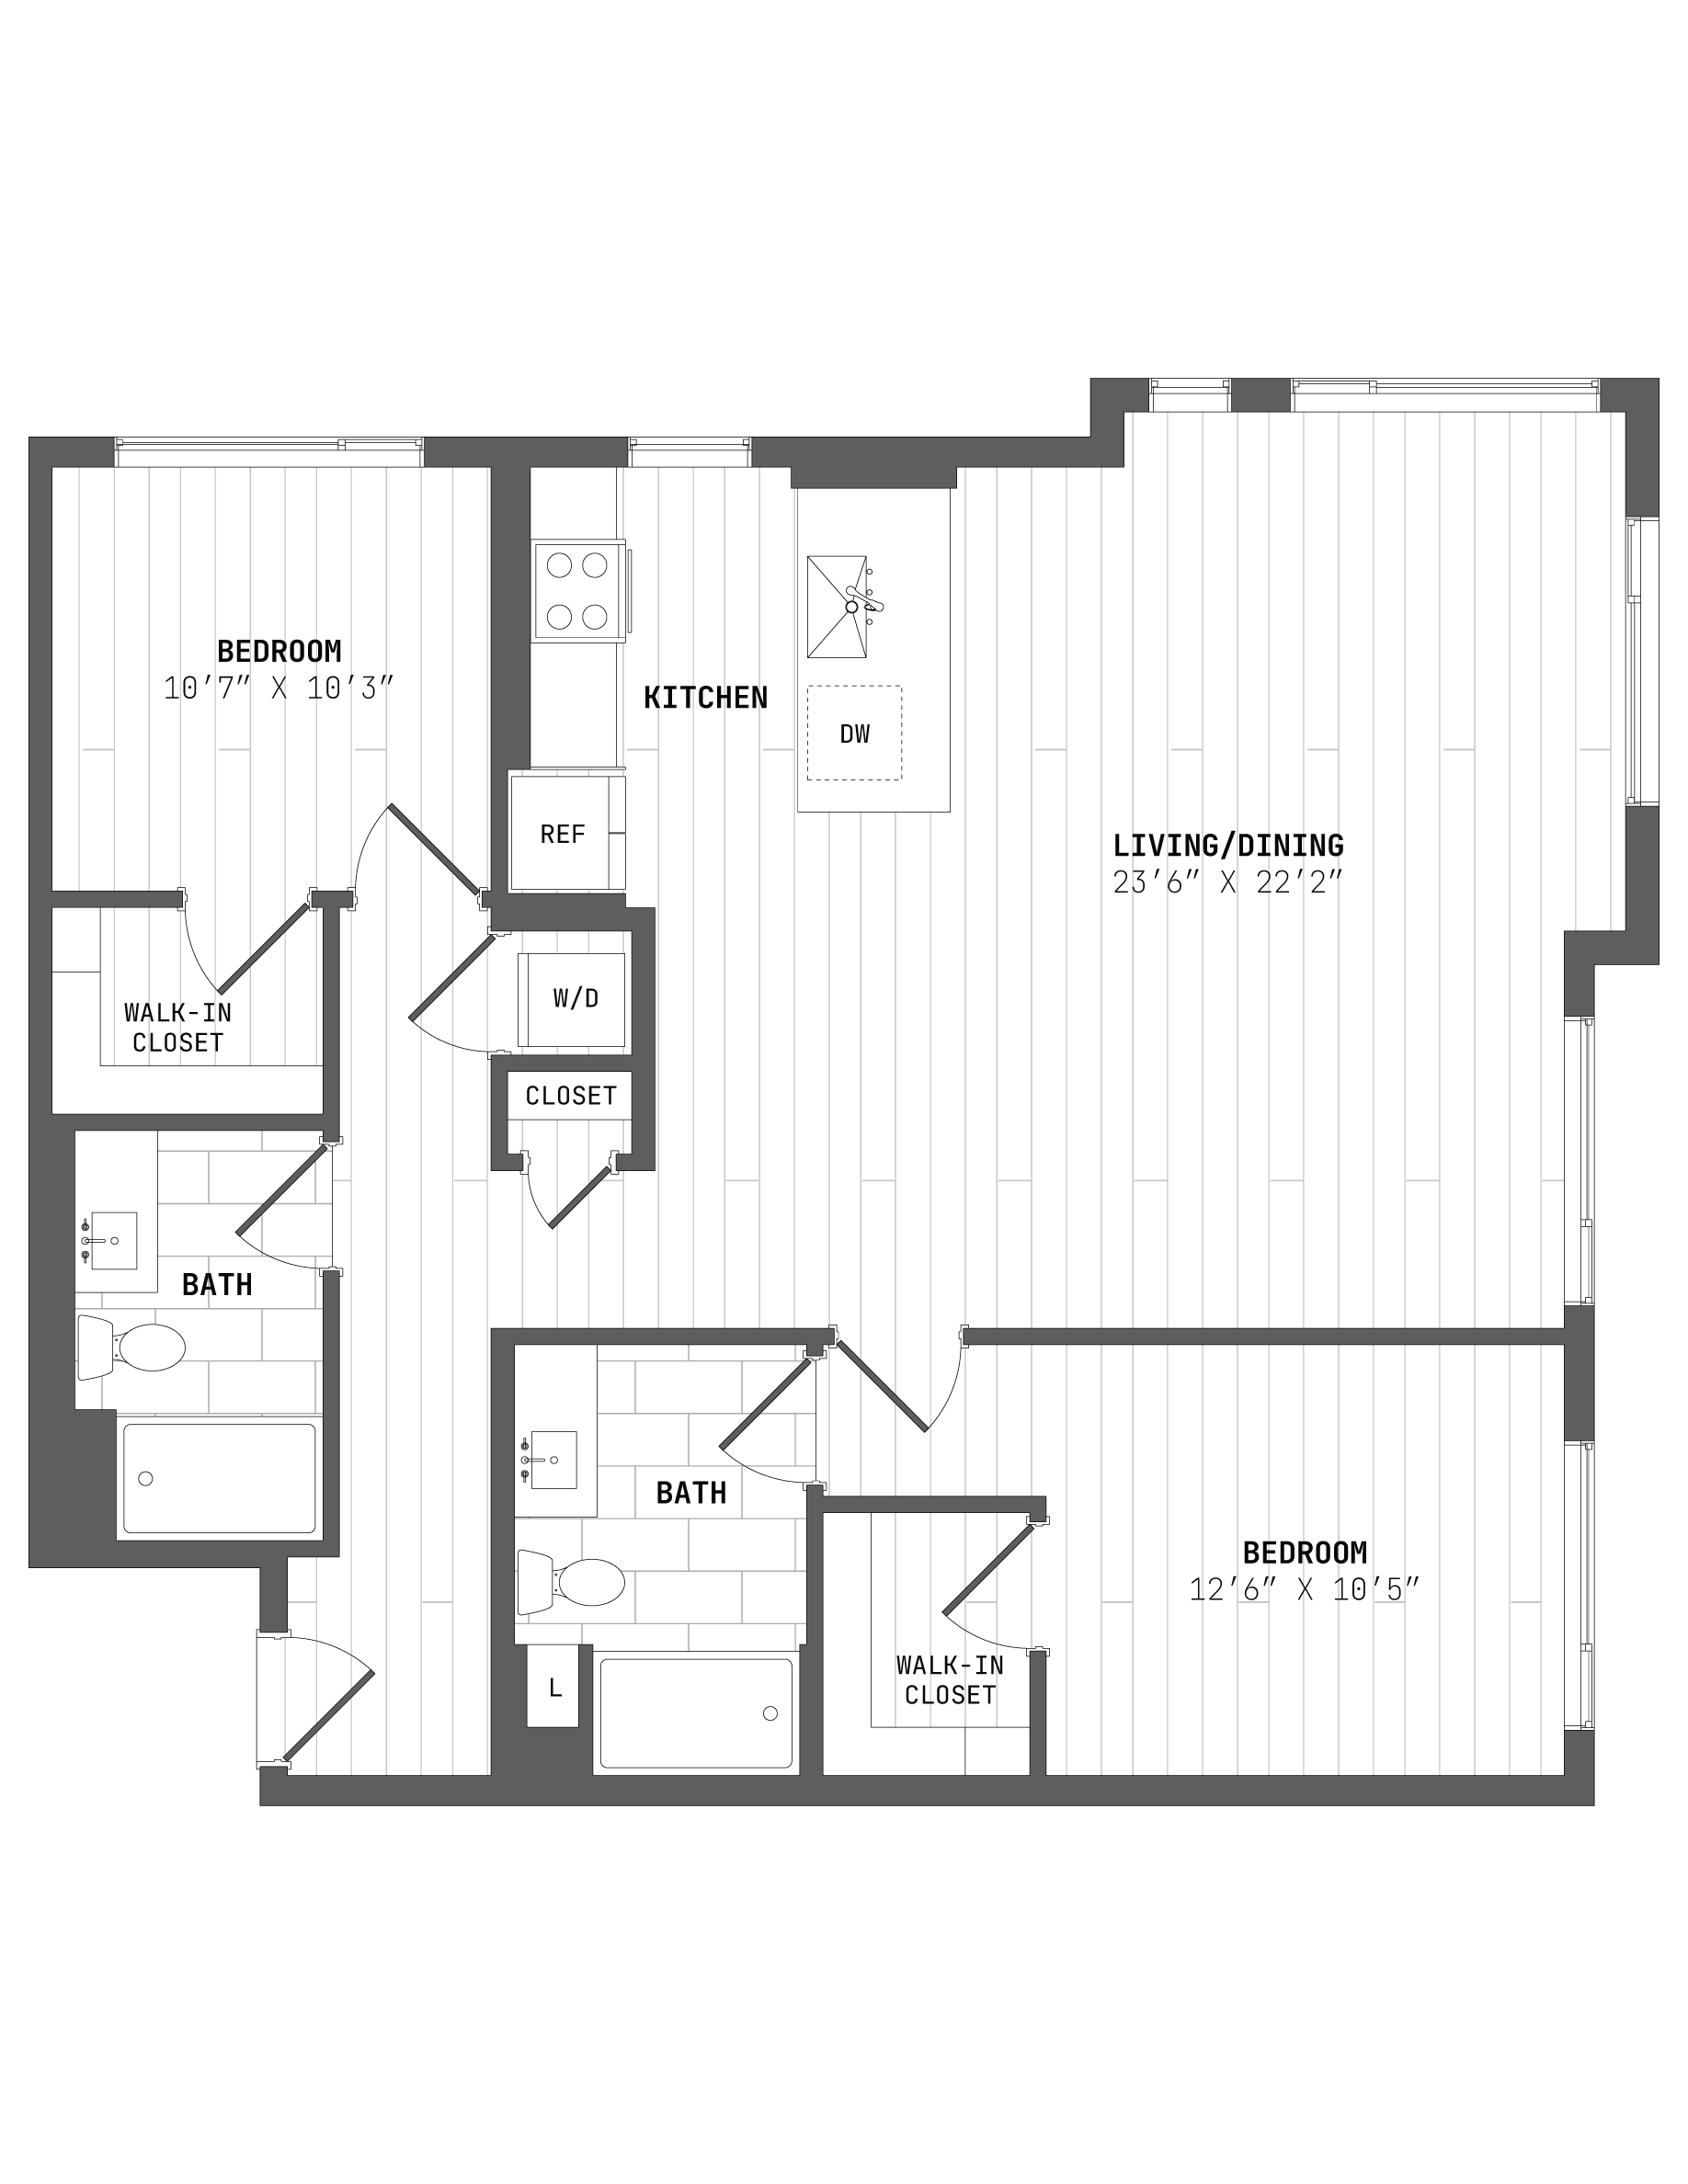 Apartment 4785253 floorplan